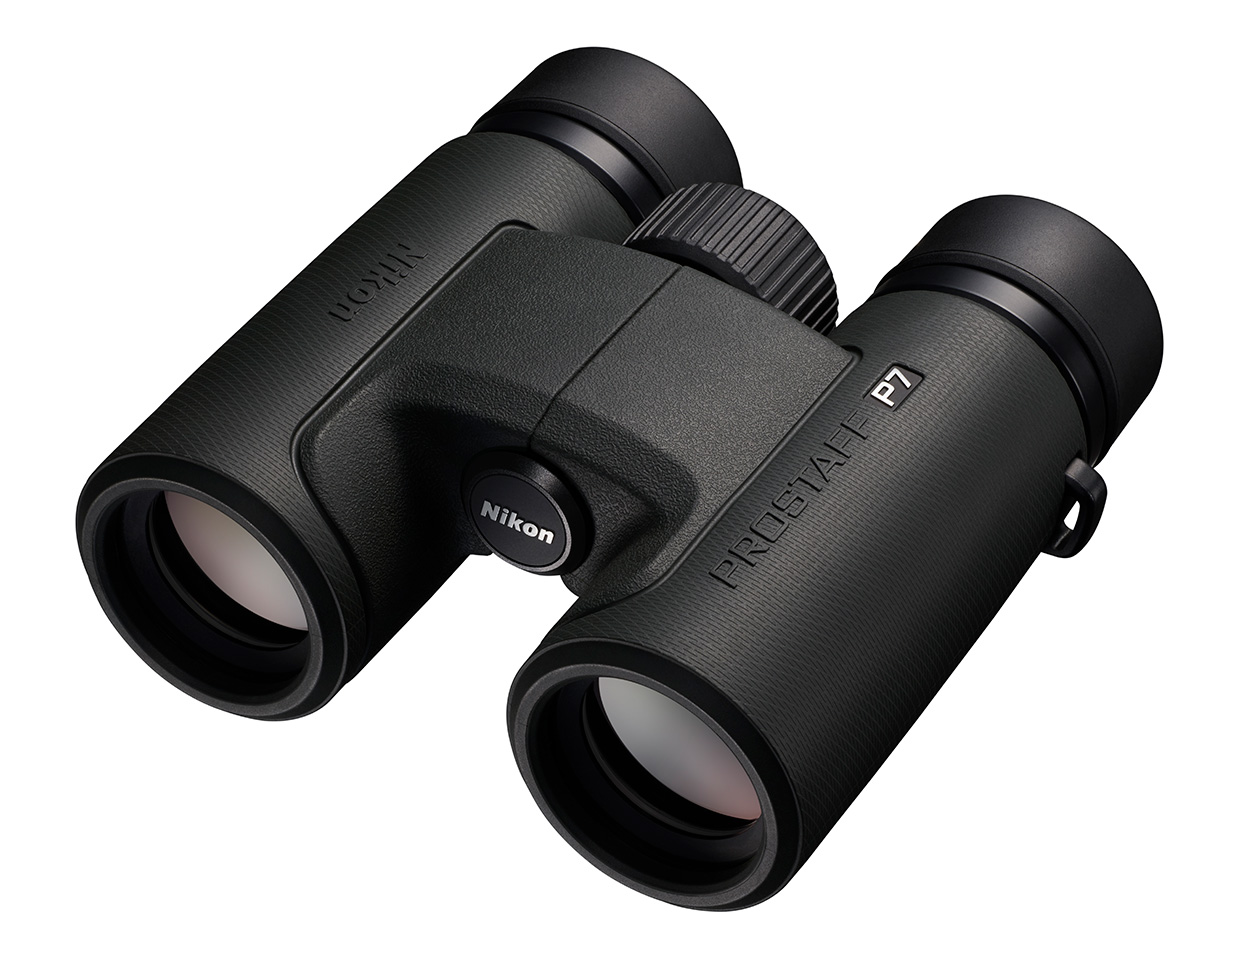 Nikon introduces the PROSTAFF P7 Binoculars | News | Nikon About Us